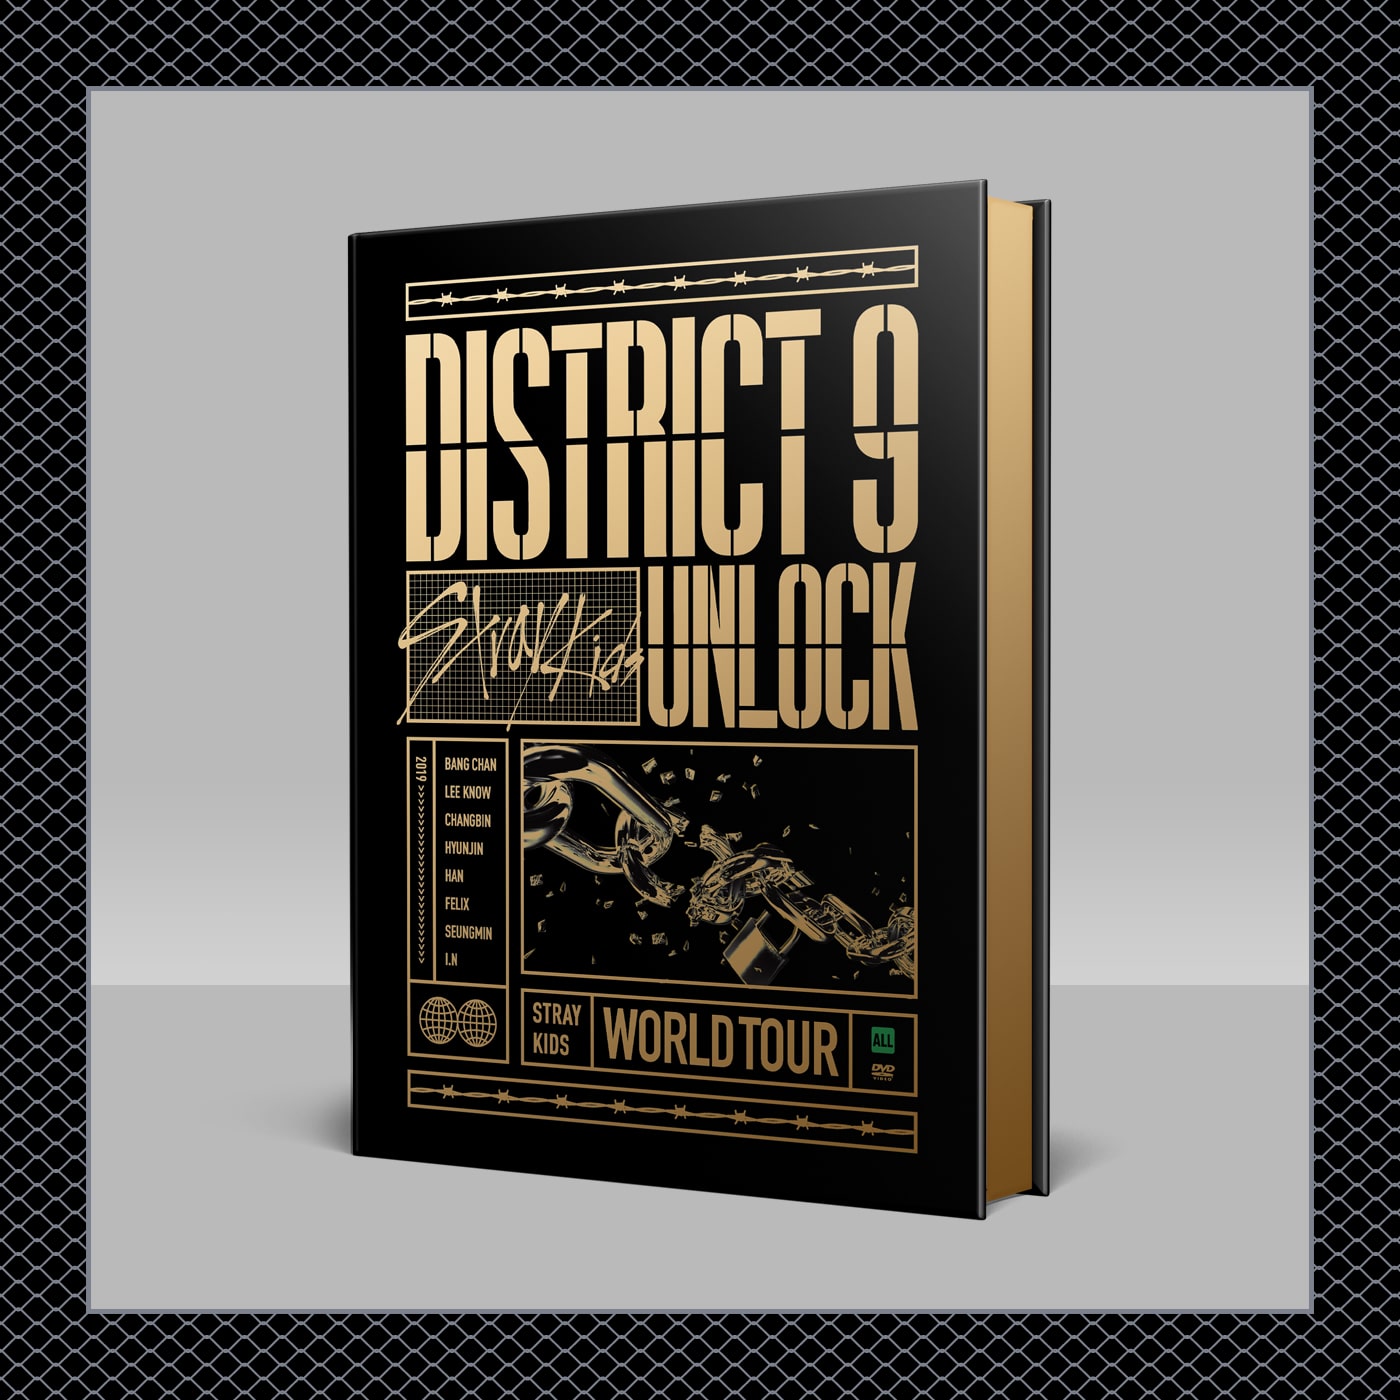 STRAY KIDS - World Tour 'District 9: Unlock' in SEOUL